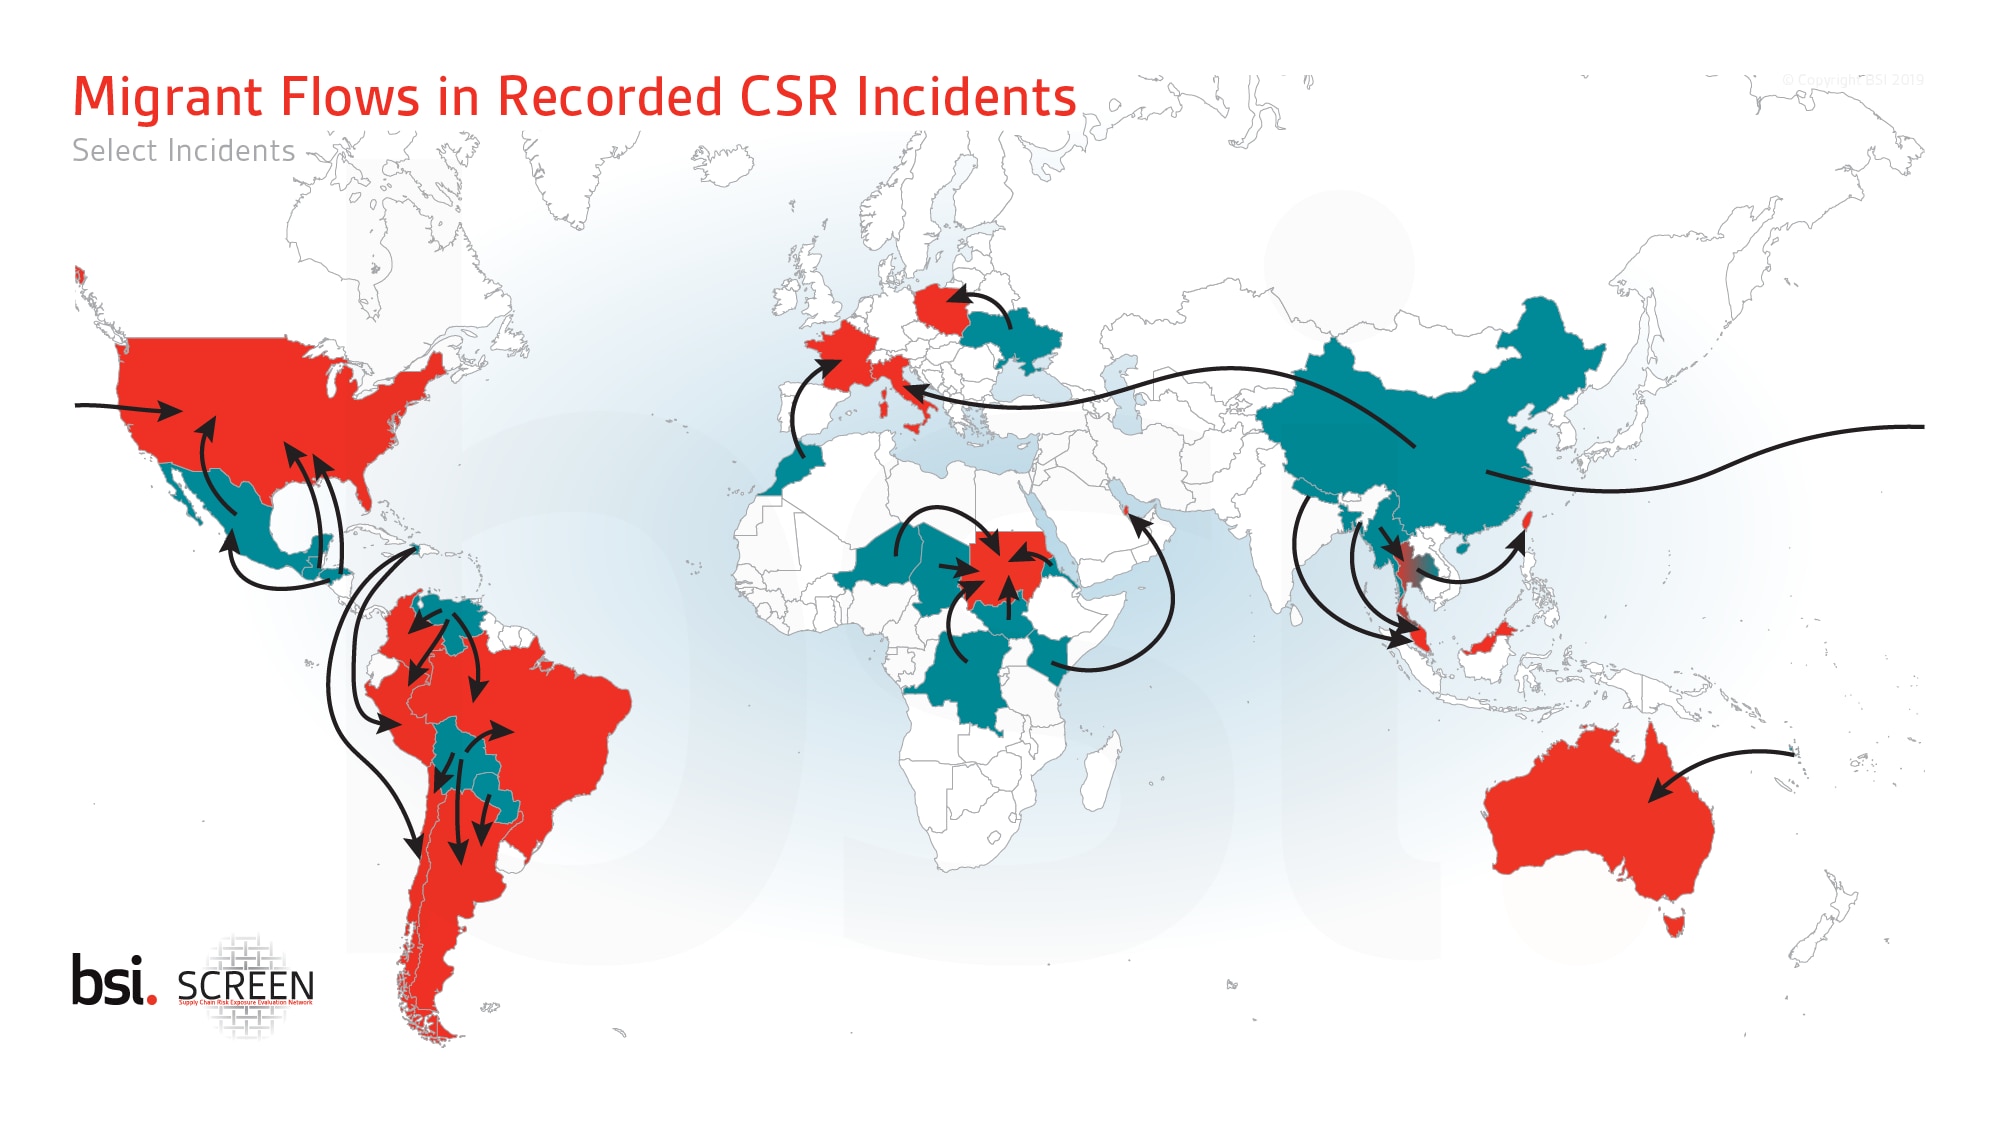 Migrant flows in CSR incidents